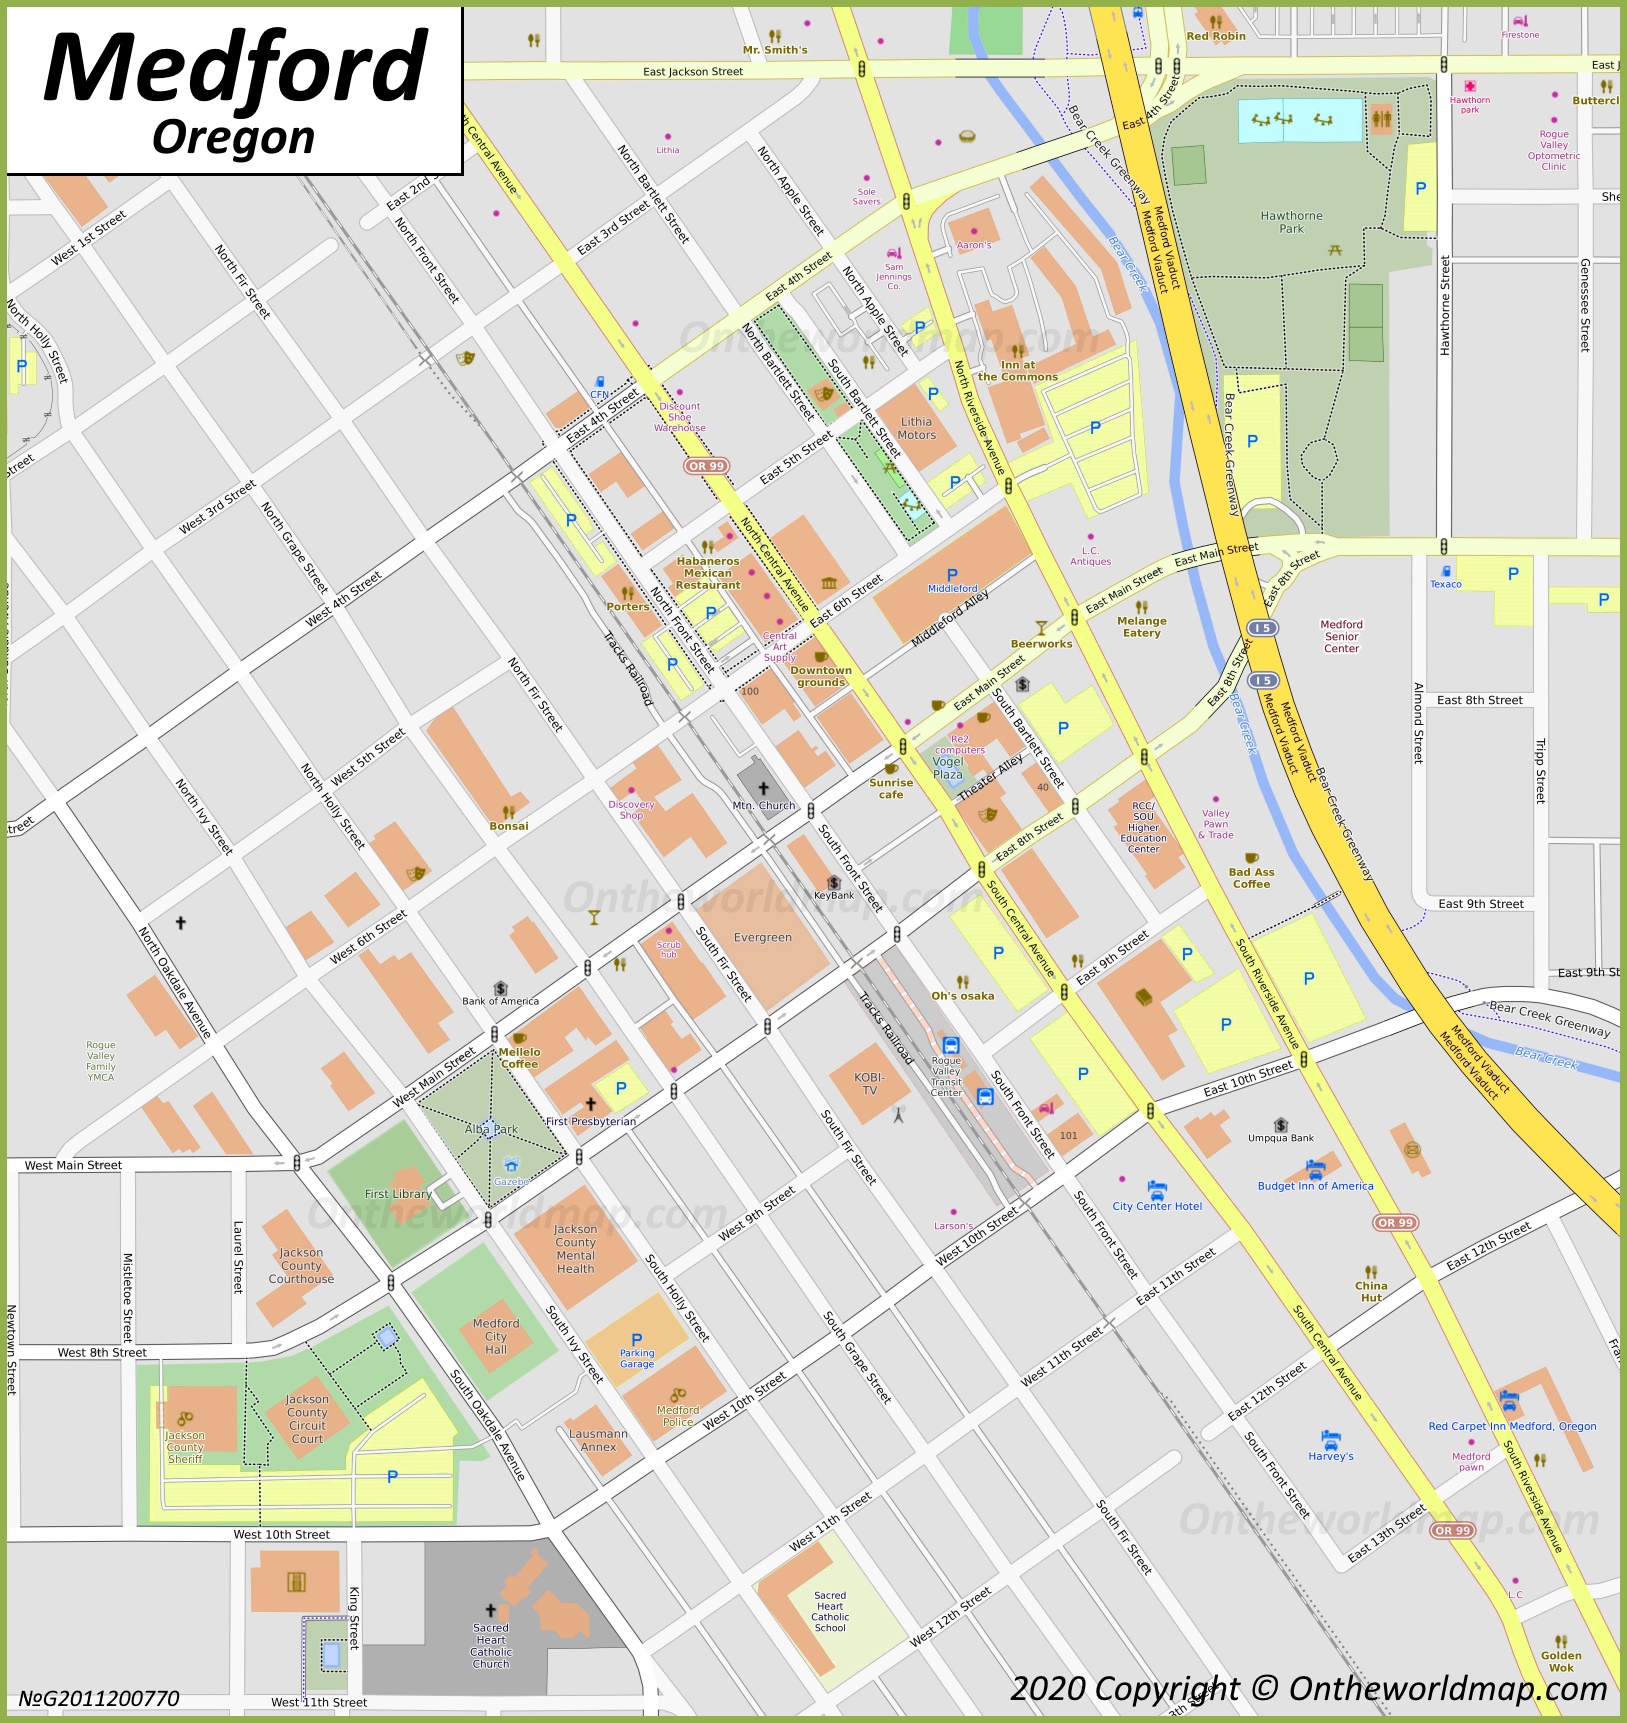 Medford Map Oregon, U.S. Discover Medford with Detailed Maps